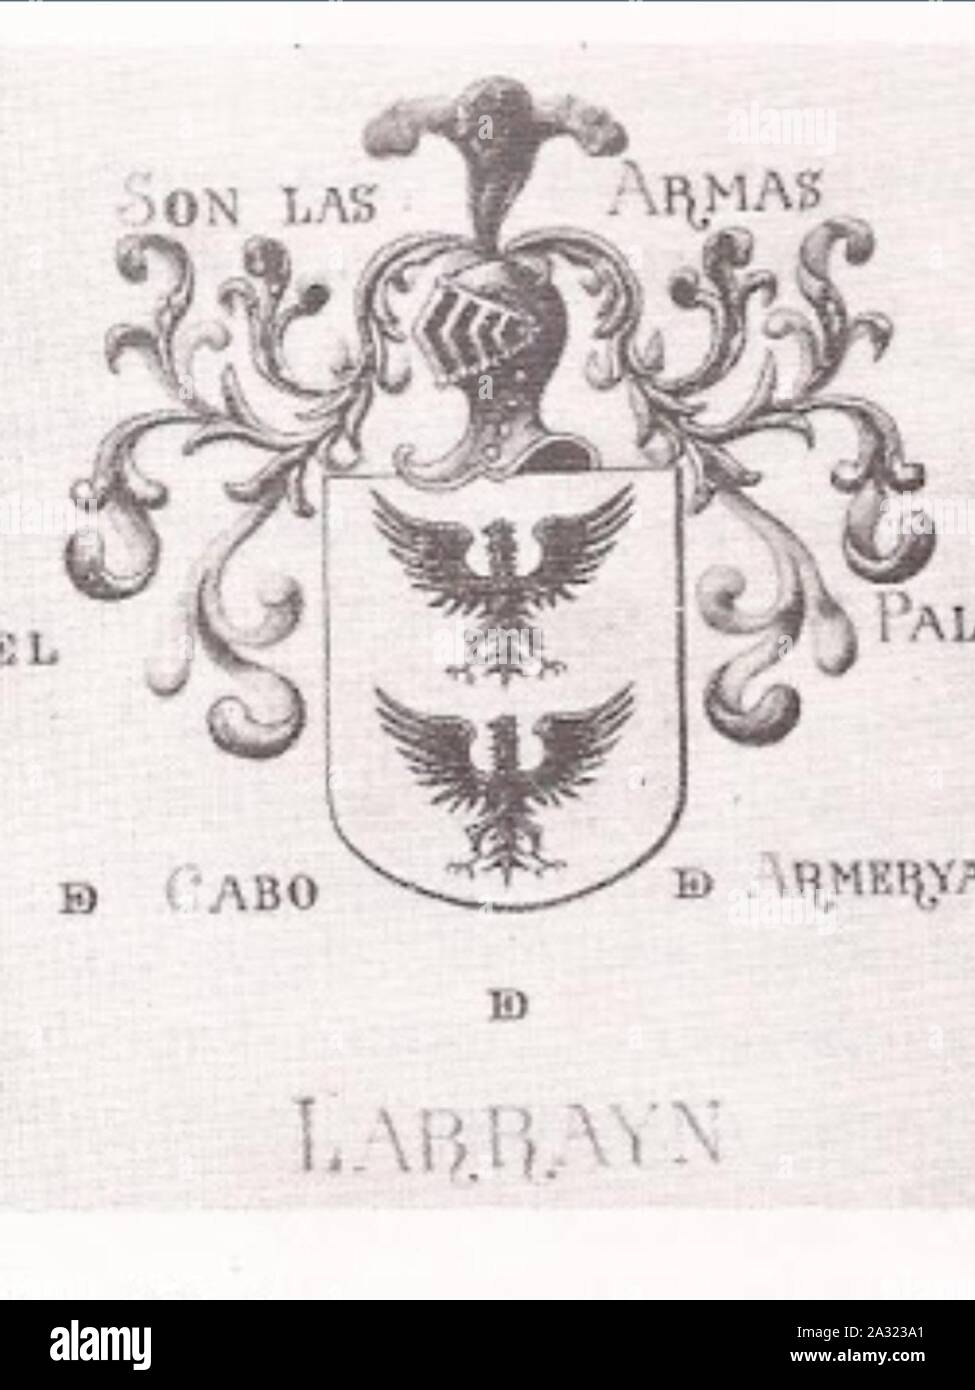 Escudo de armas de la Falmilia Larraín. Stock Photo